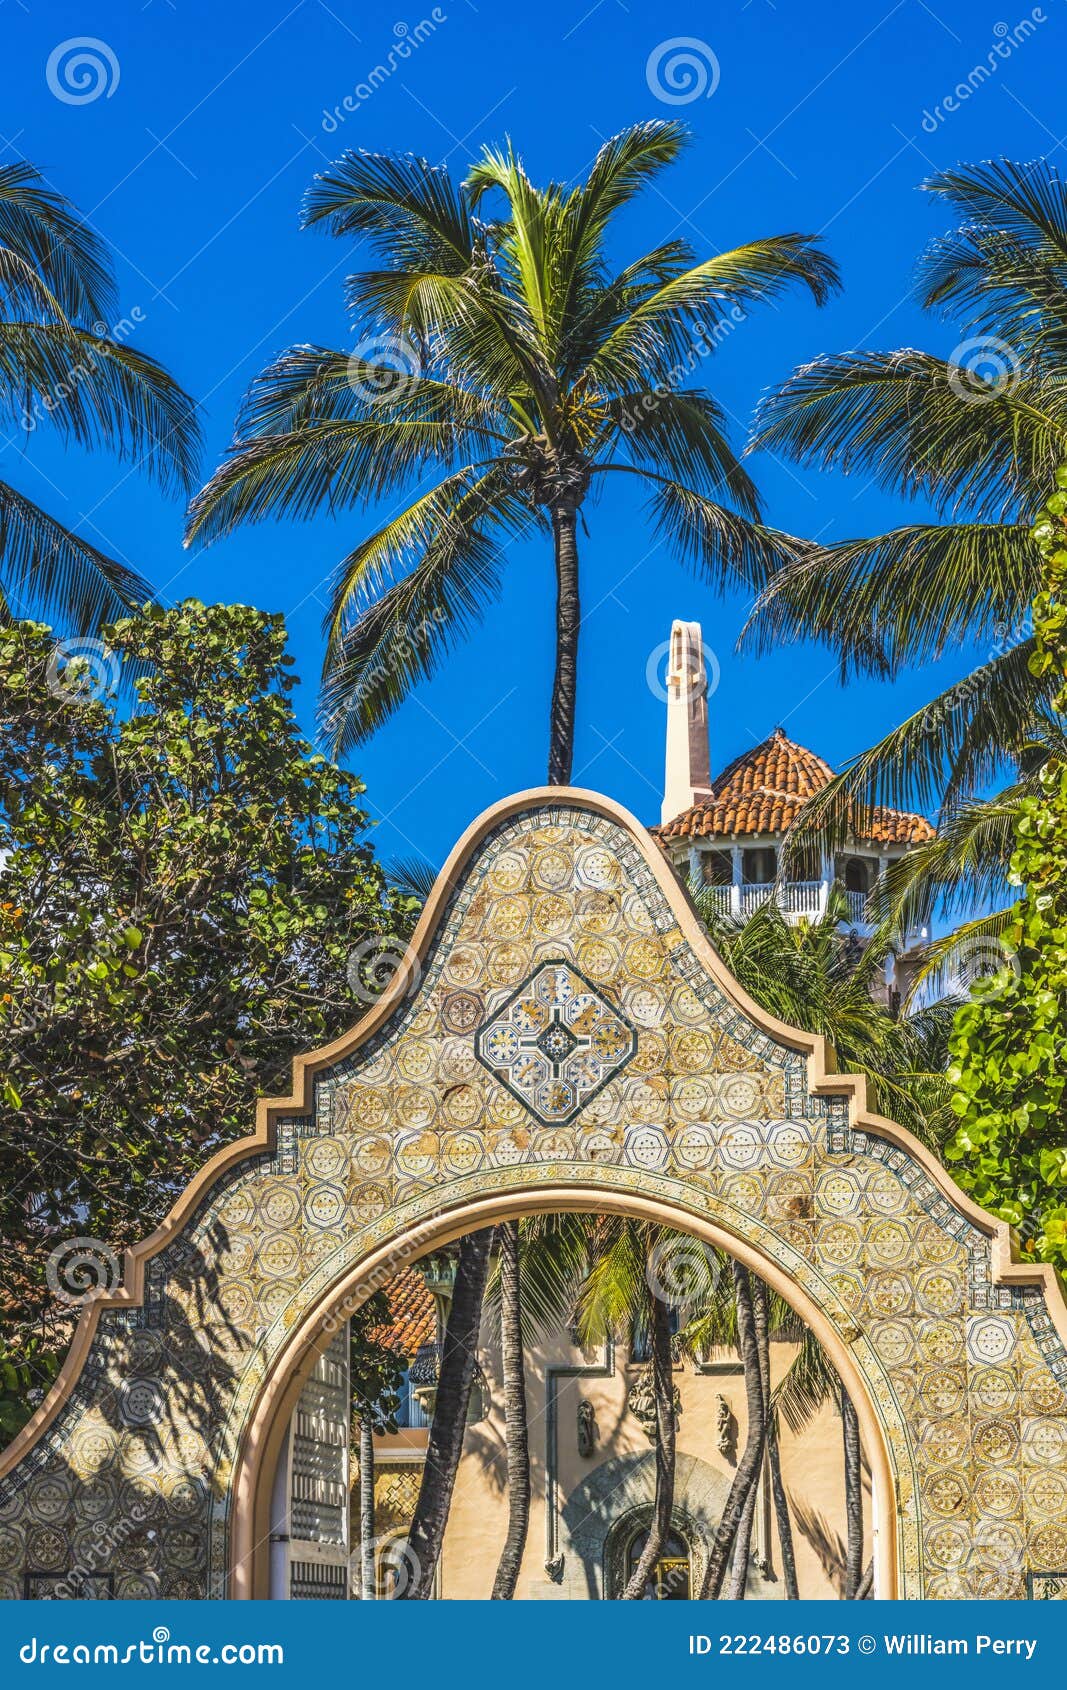 entrance gate mar-a-lago trump's house palm beach florida